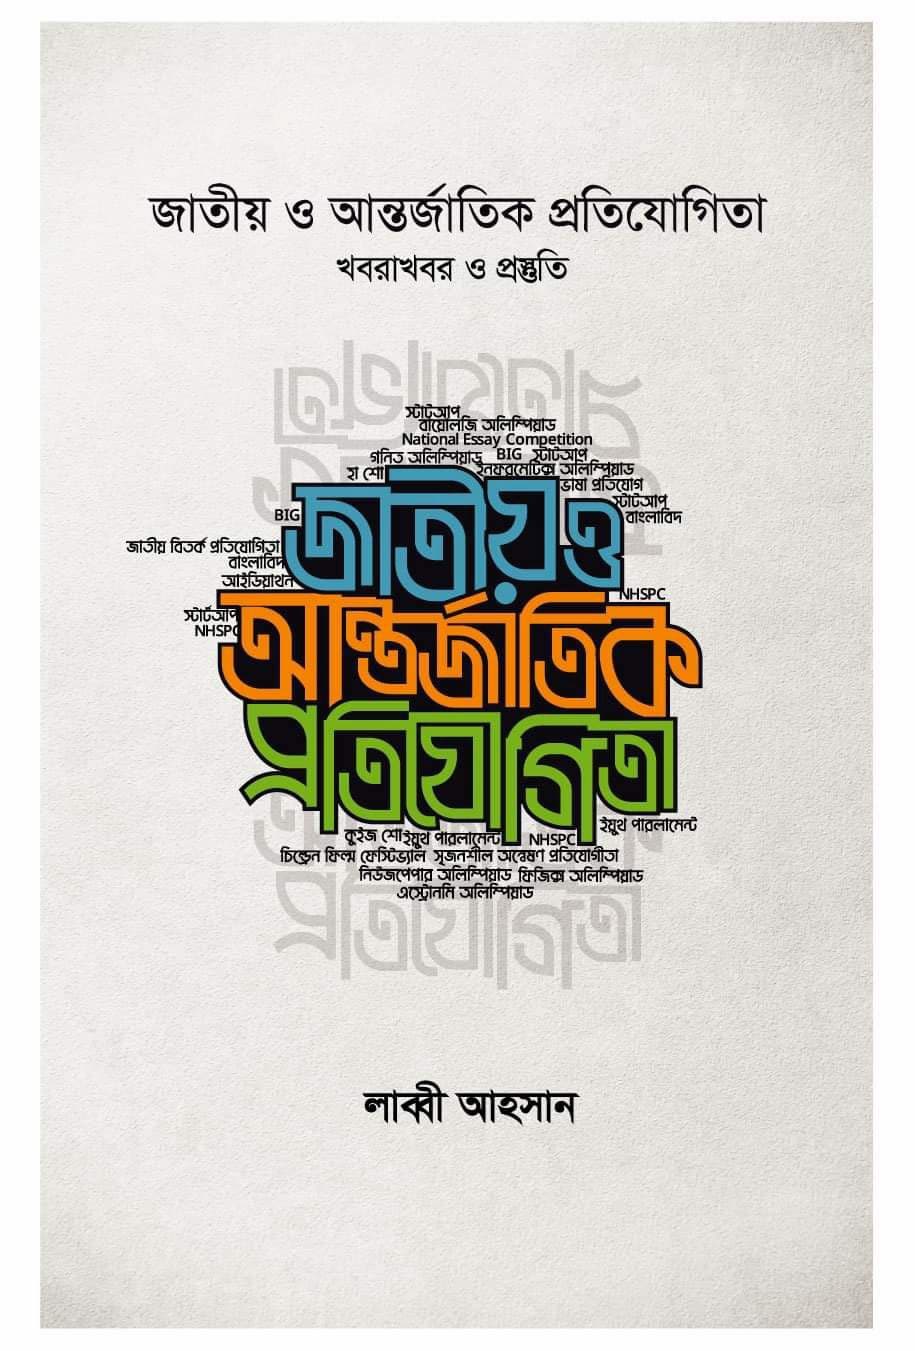 Cover page of Jatiyo O Antorjatik Protijogita book